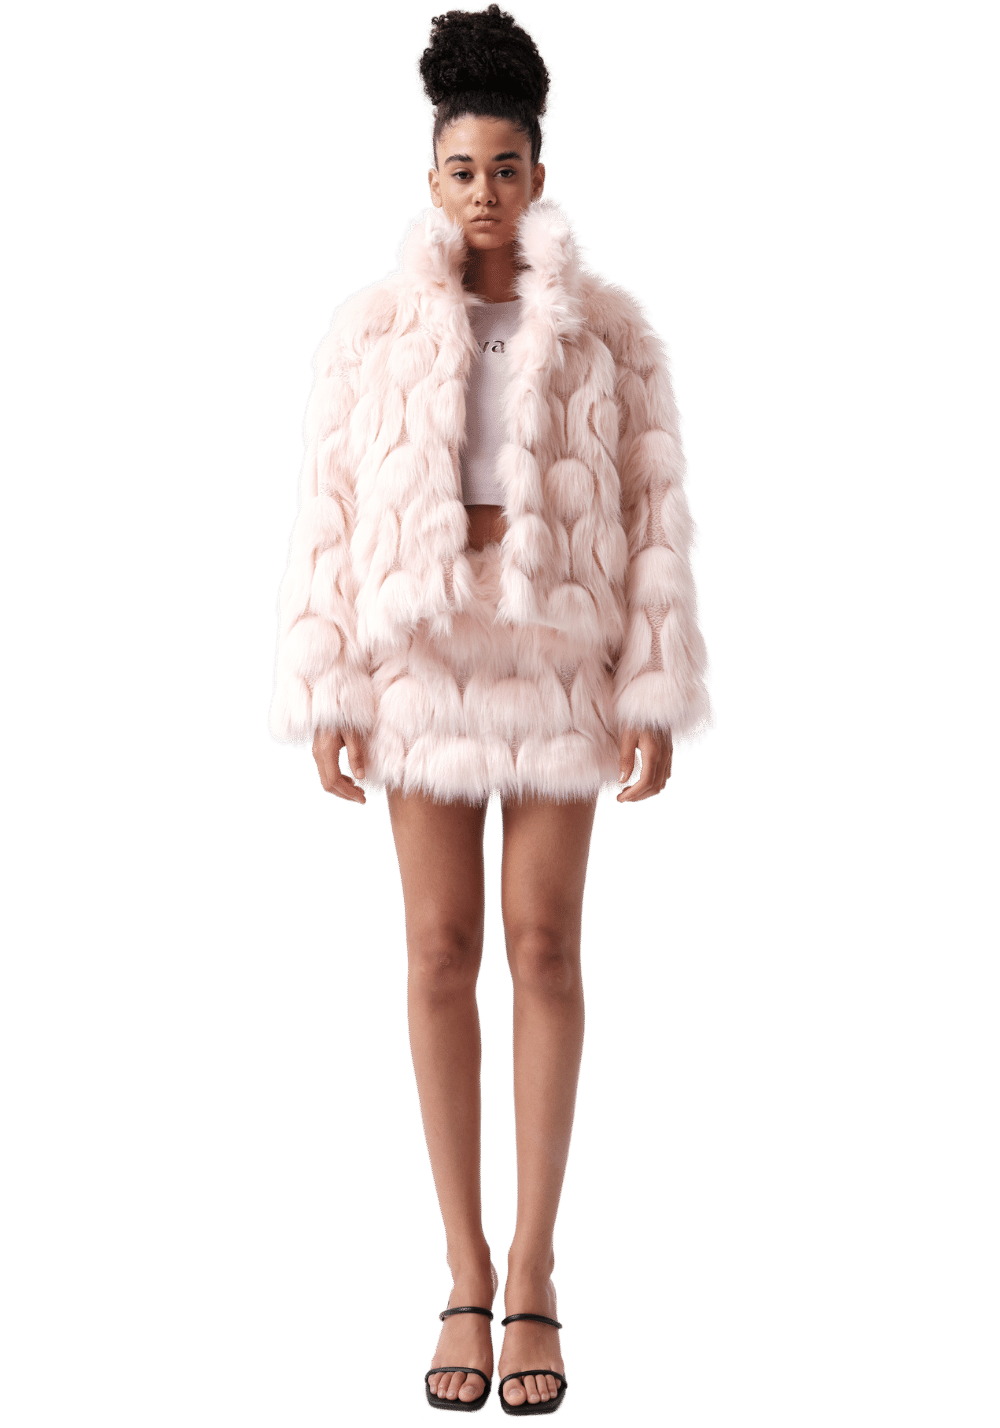 Pink Fur Coat - PSYLOS 1, Pink Fur Coat, Jacket, VANN VALRENCÉ, PSYLOS 1